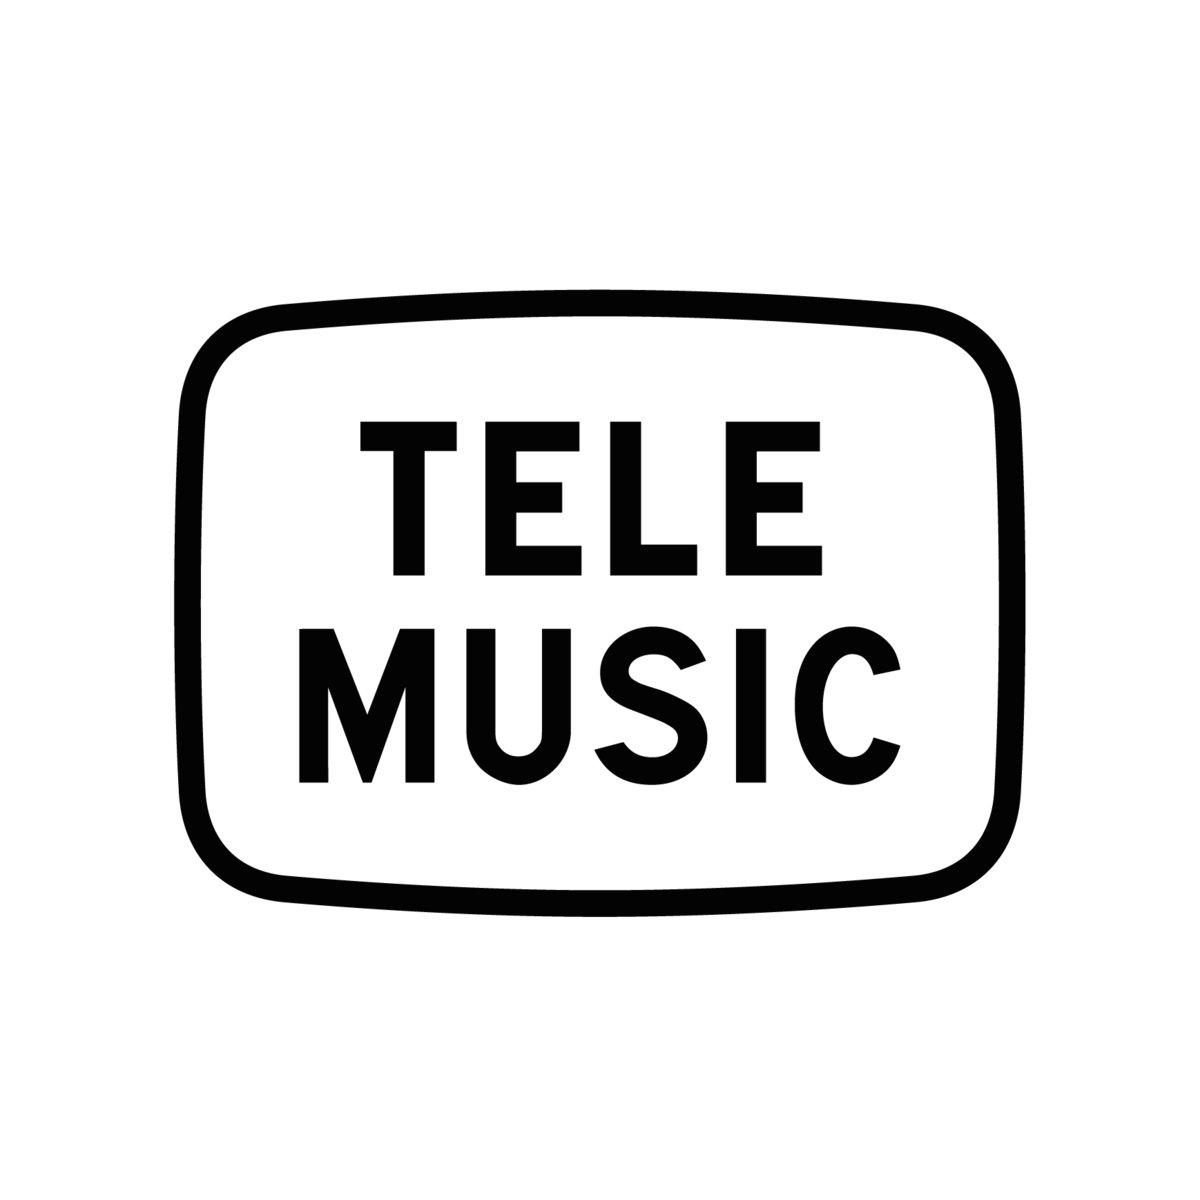 Tele Music logo